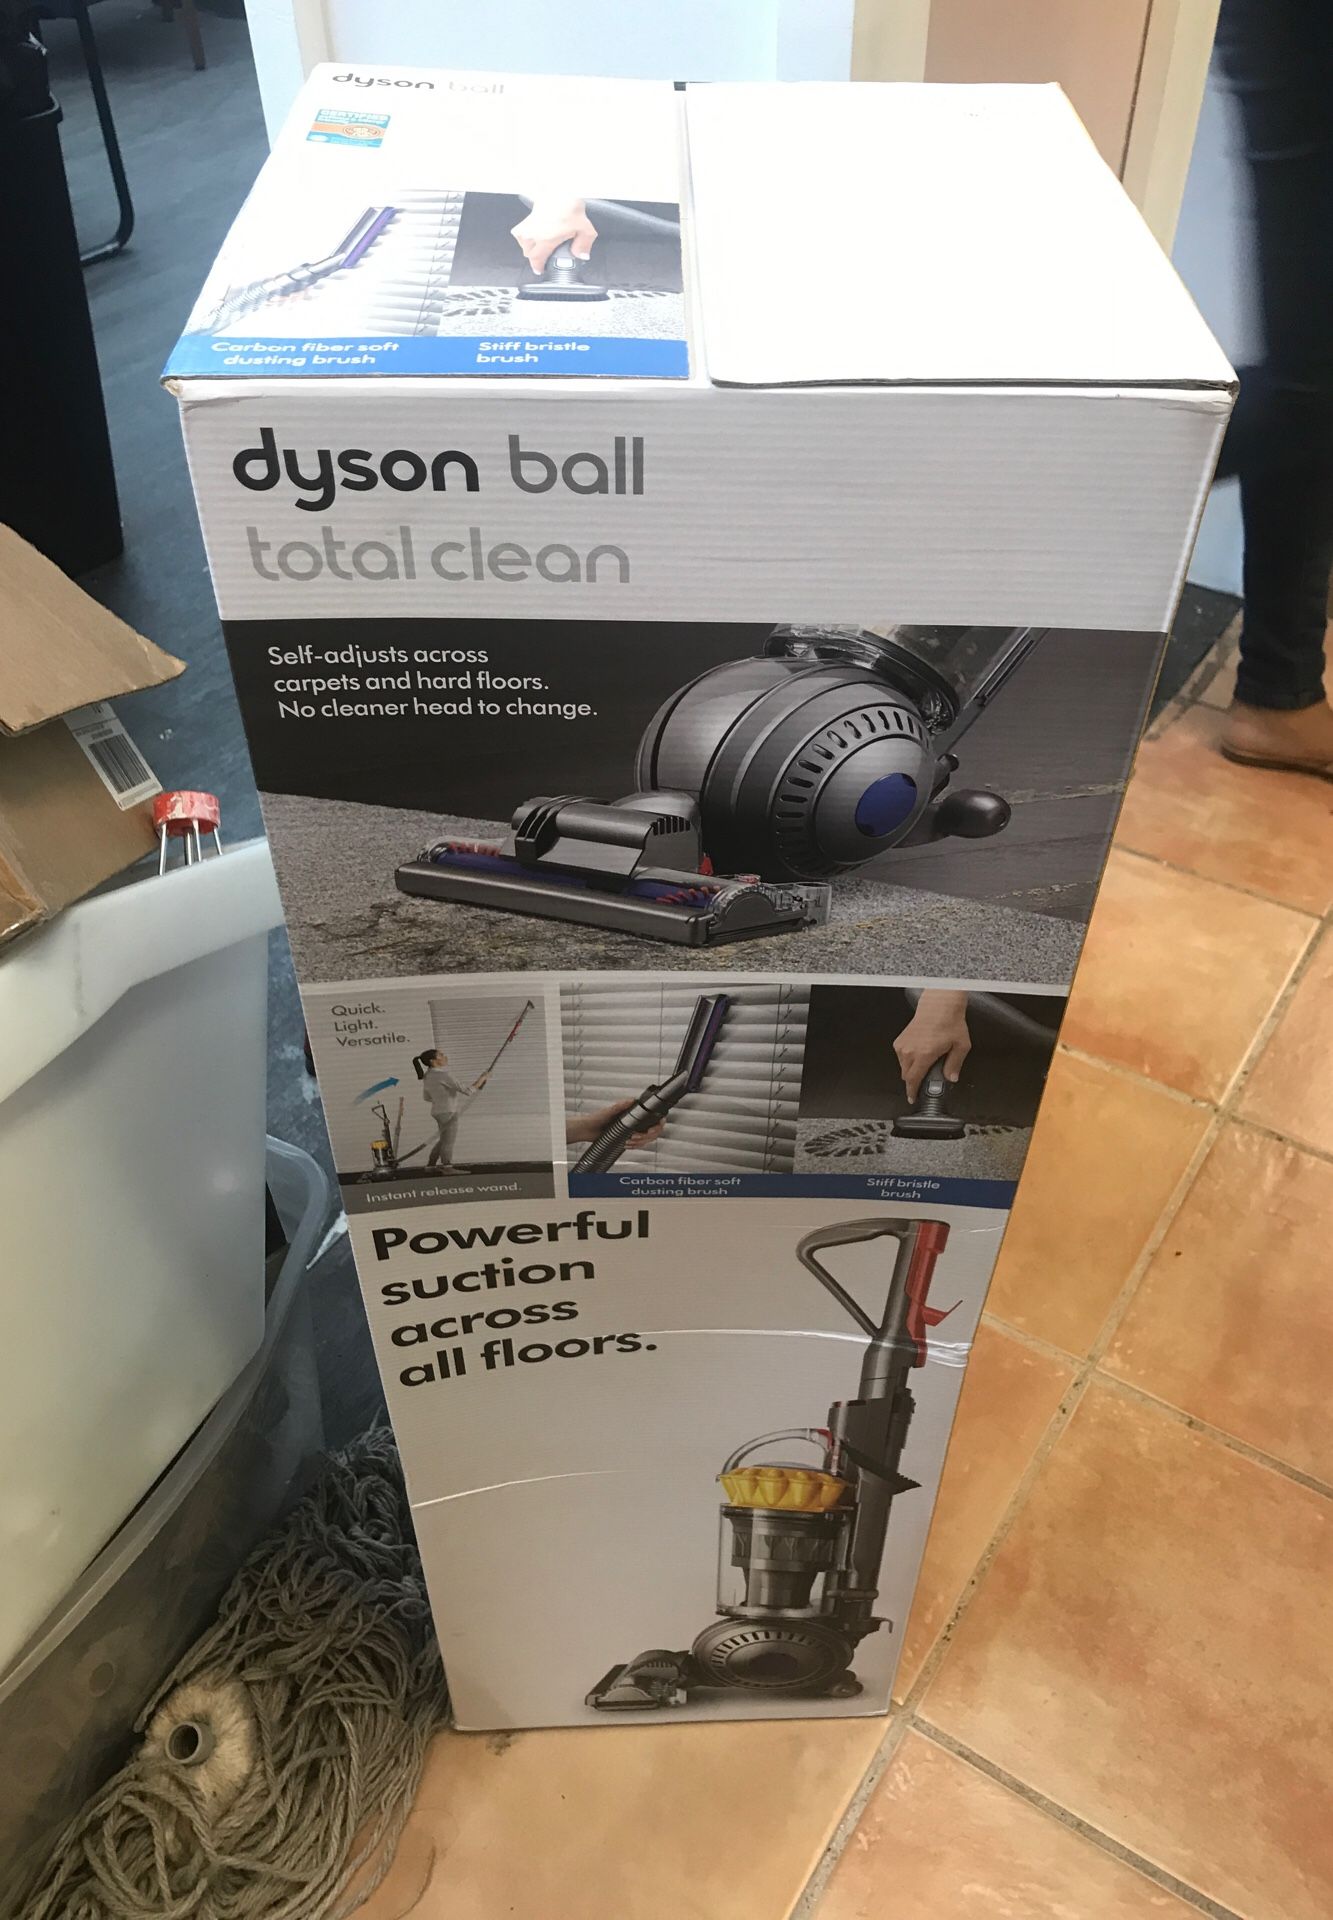 Dyson ball total clean vacuum